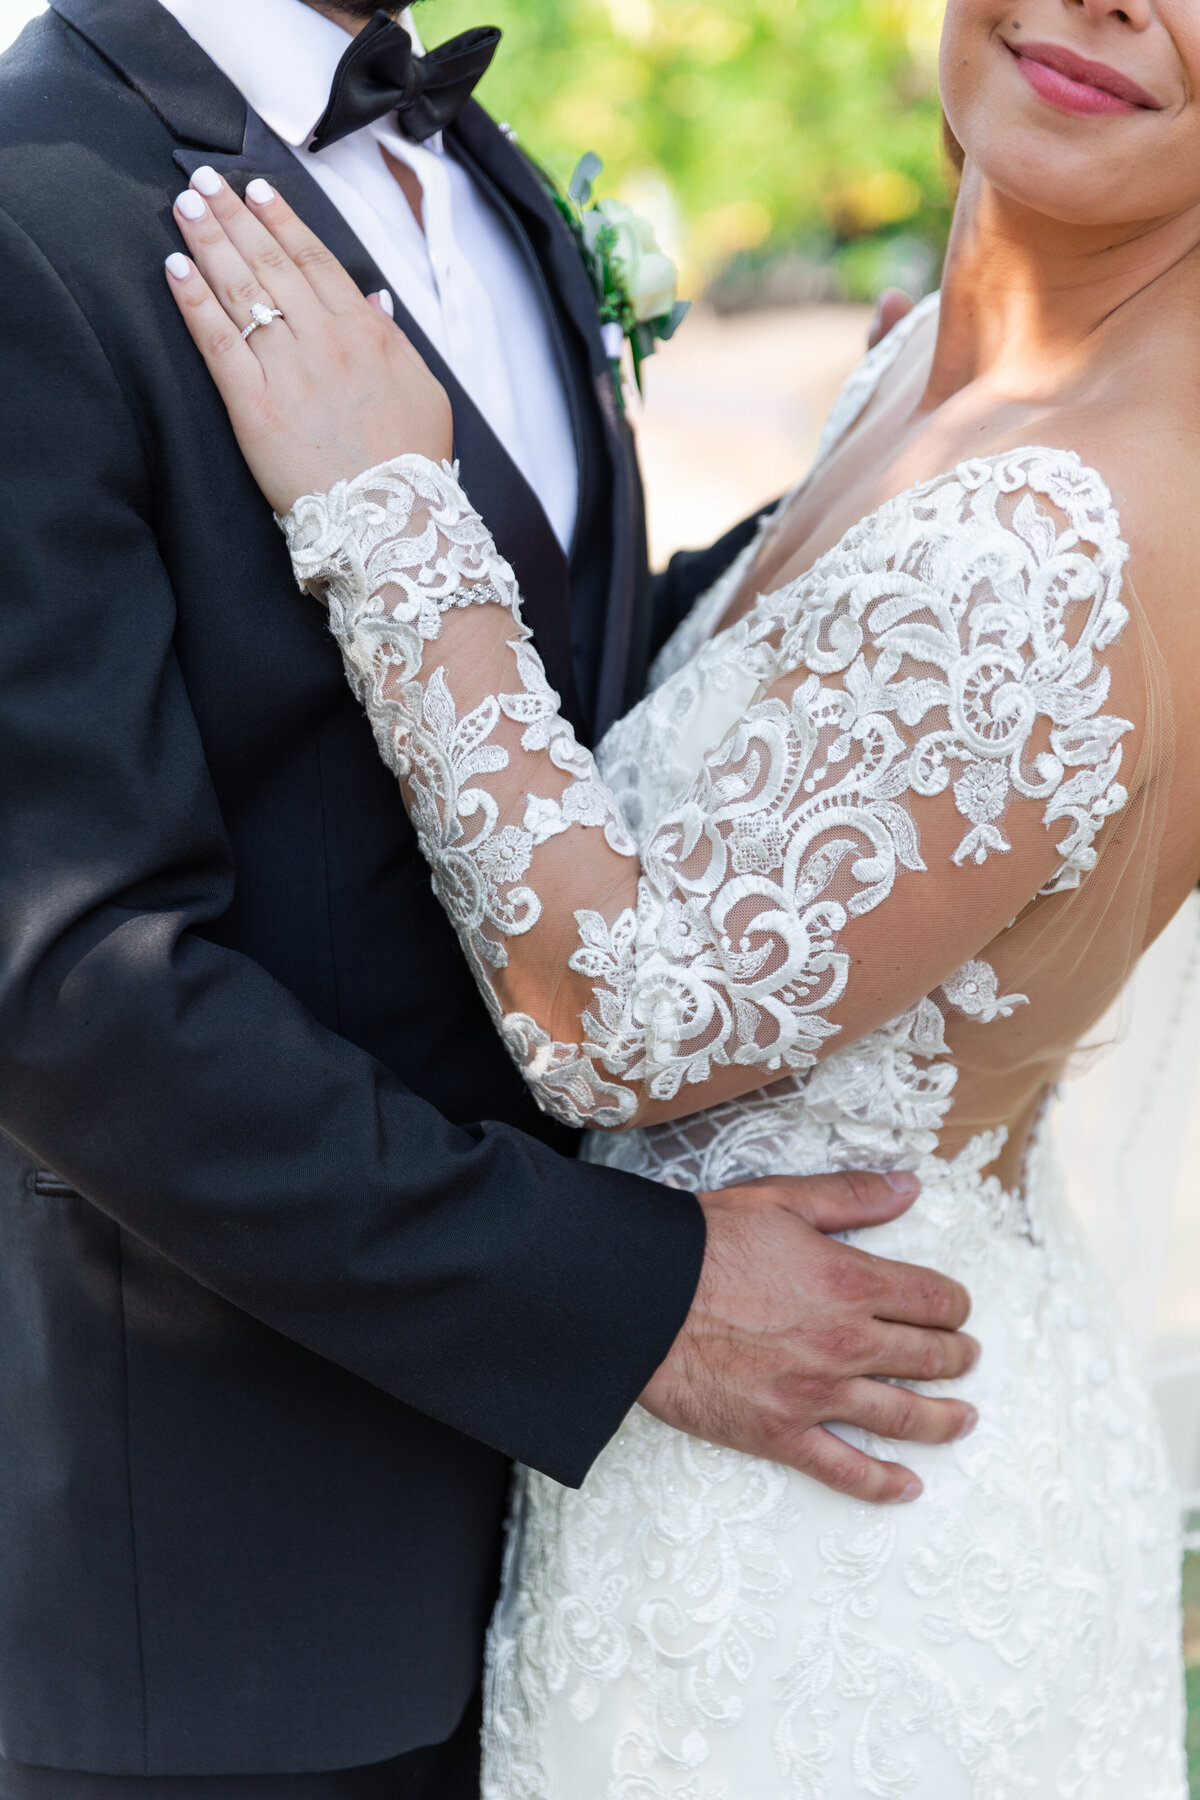 bride-and-groom-details (1)